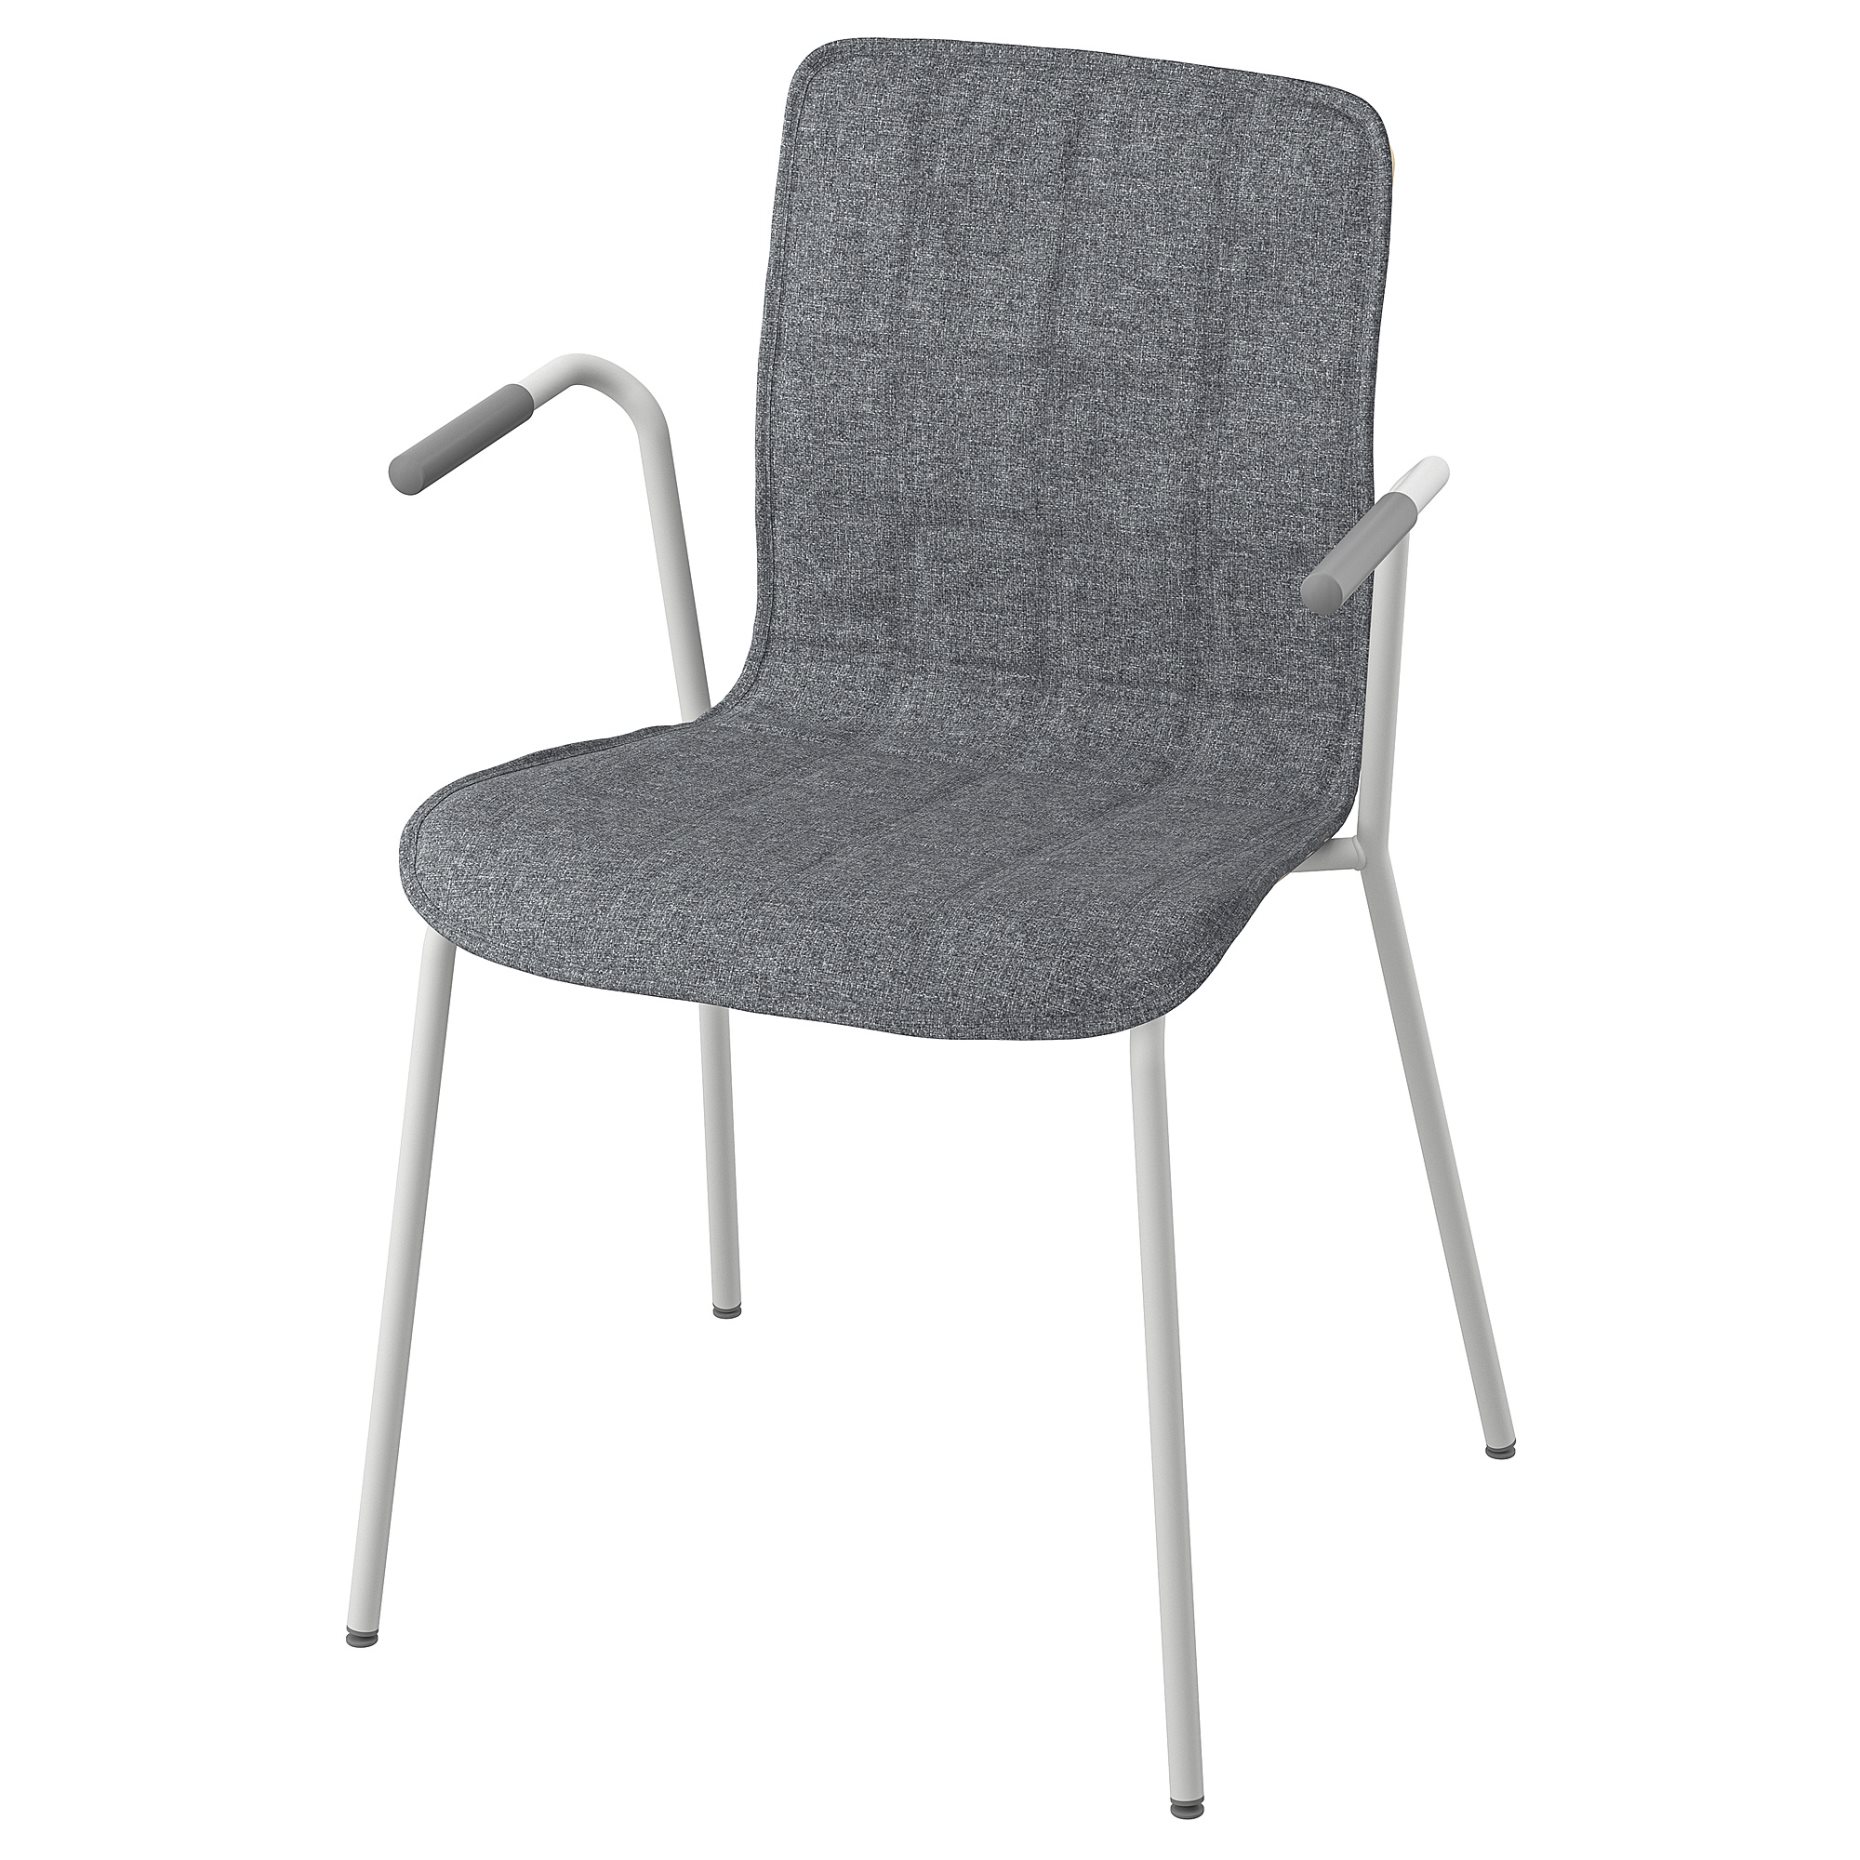 LÄKTARE, chair cover, 205.279.92